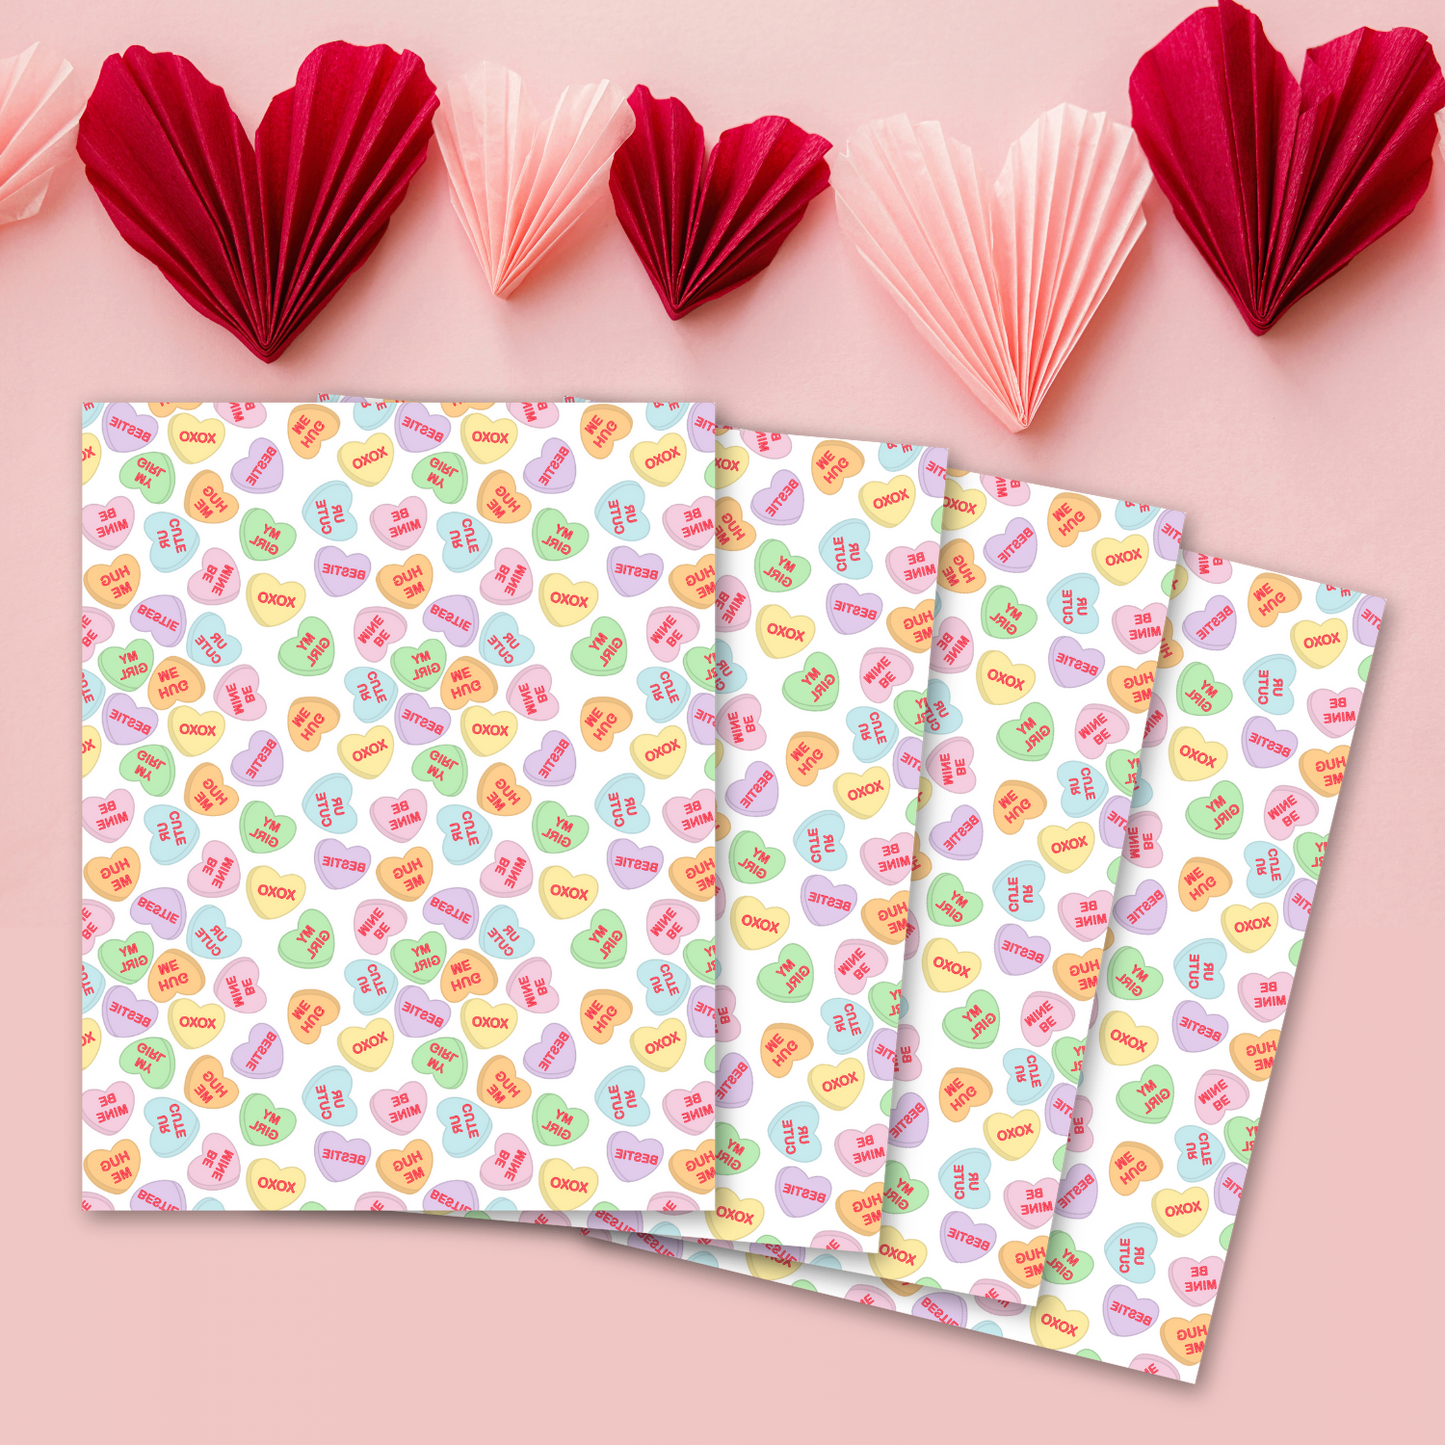 Candy Hearts Transfer Sheets